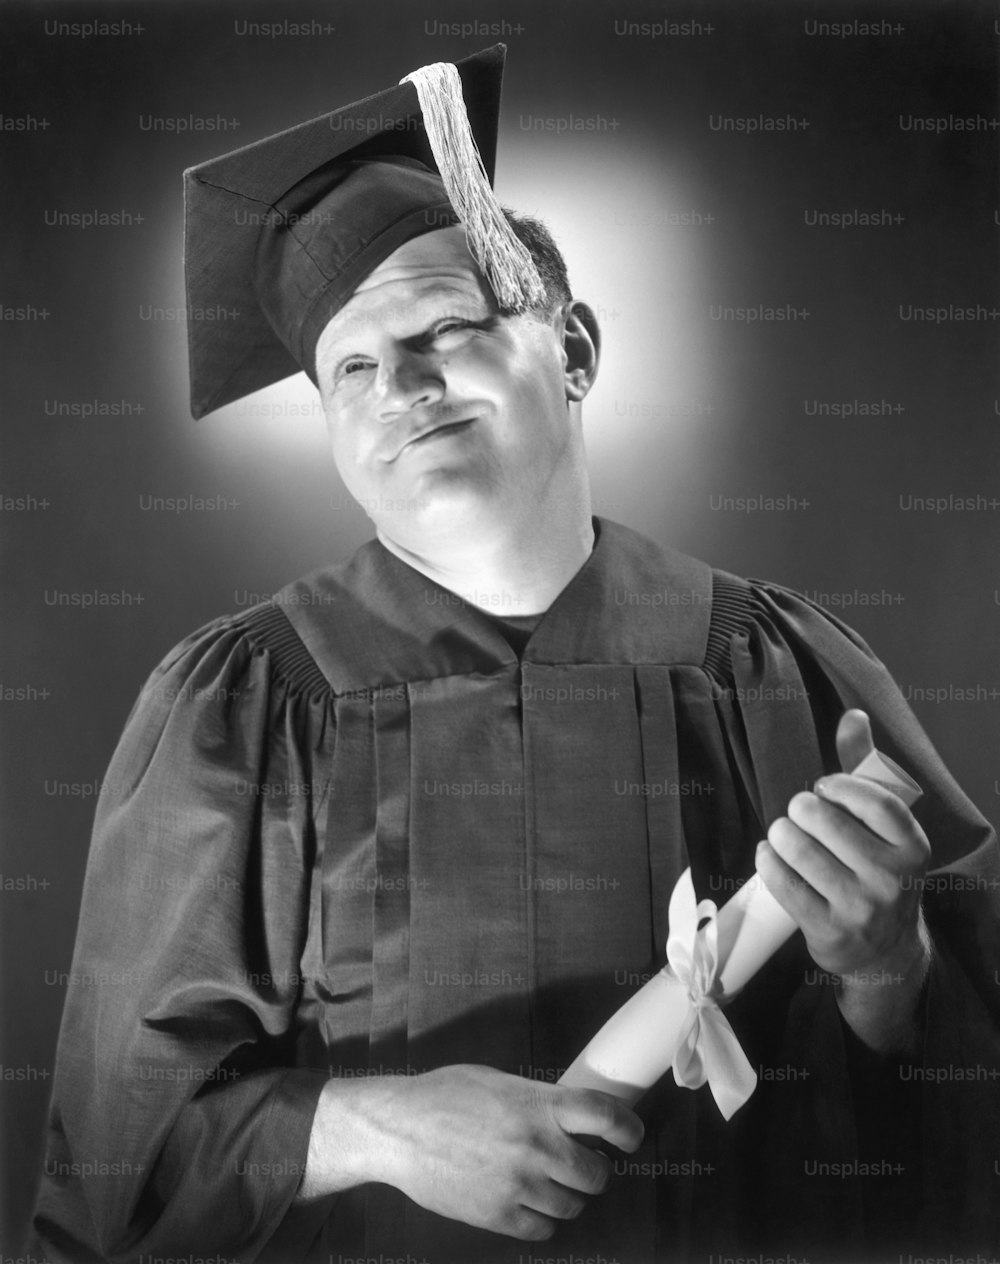 ESTADOS UNIDOS - POR VOLTA DE 1950: Retrato de homem feliz de boné e vestido c/ diploma.